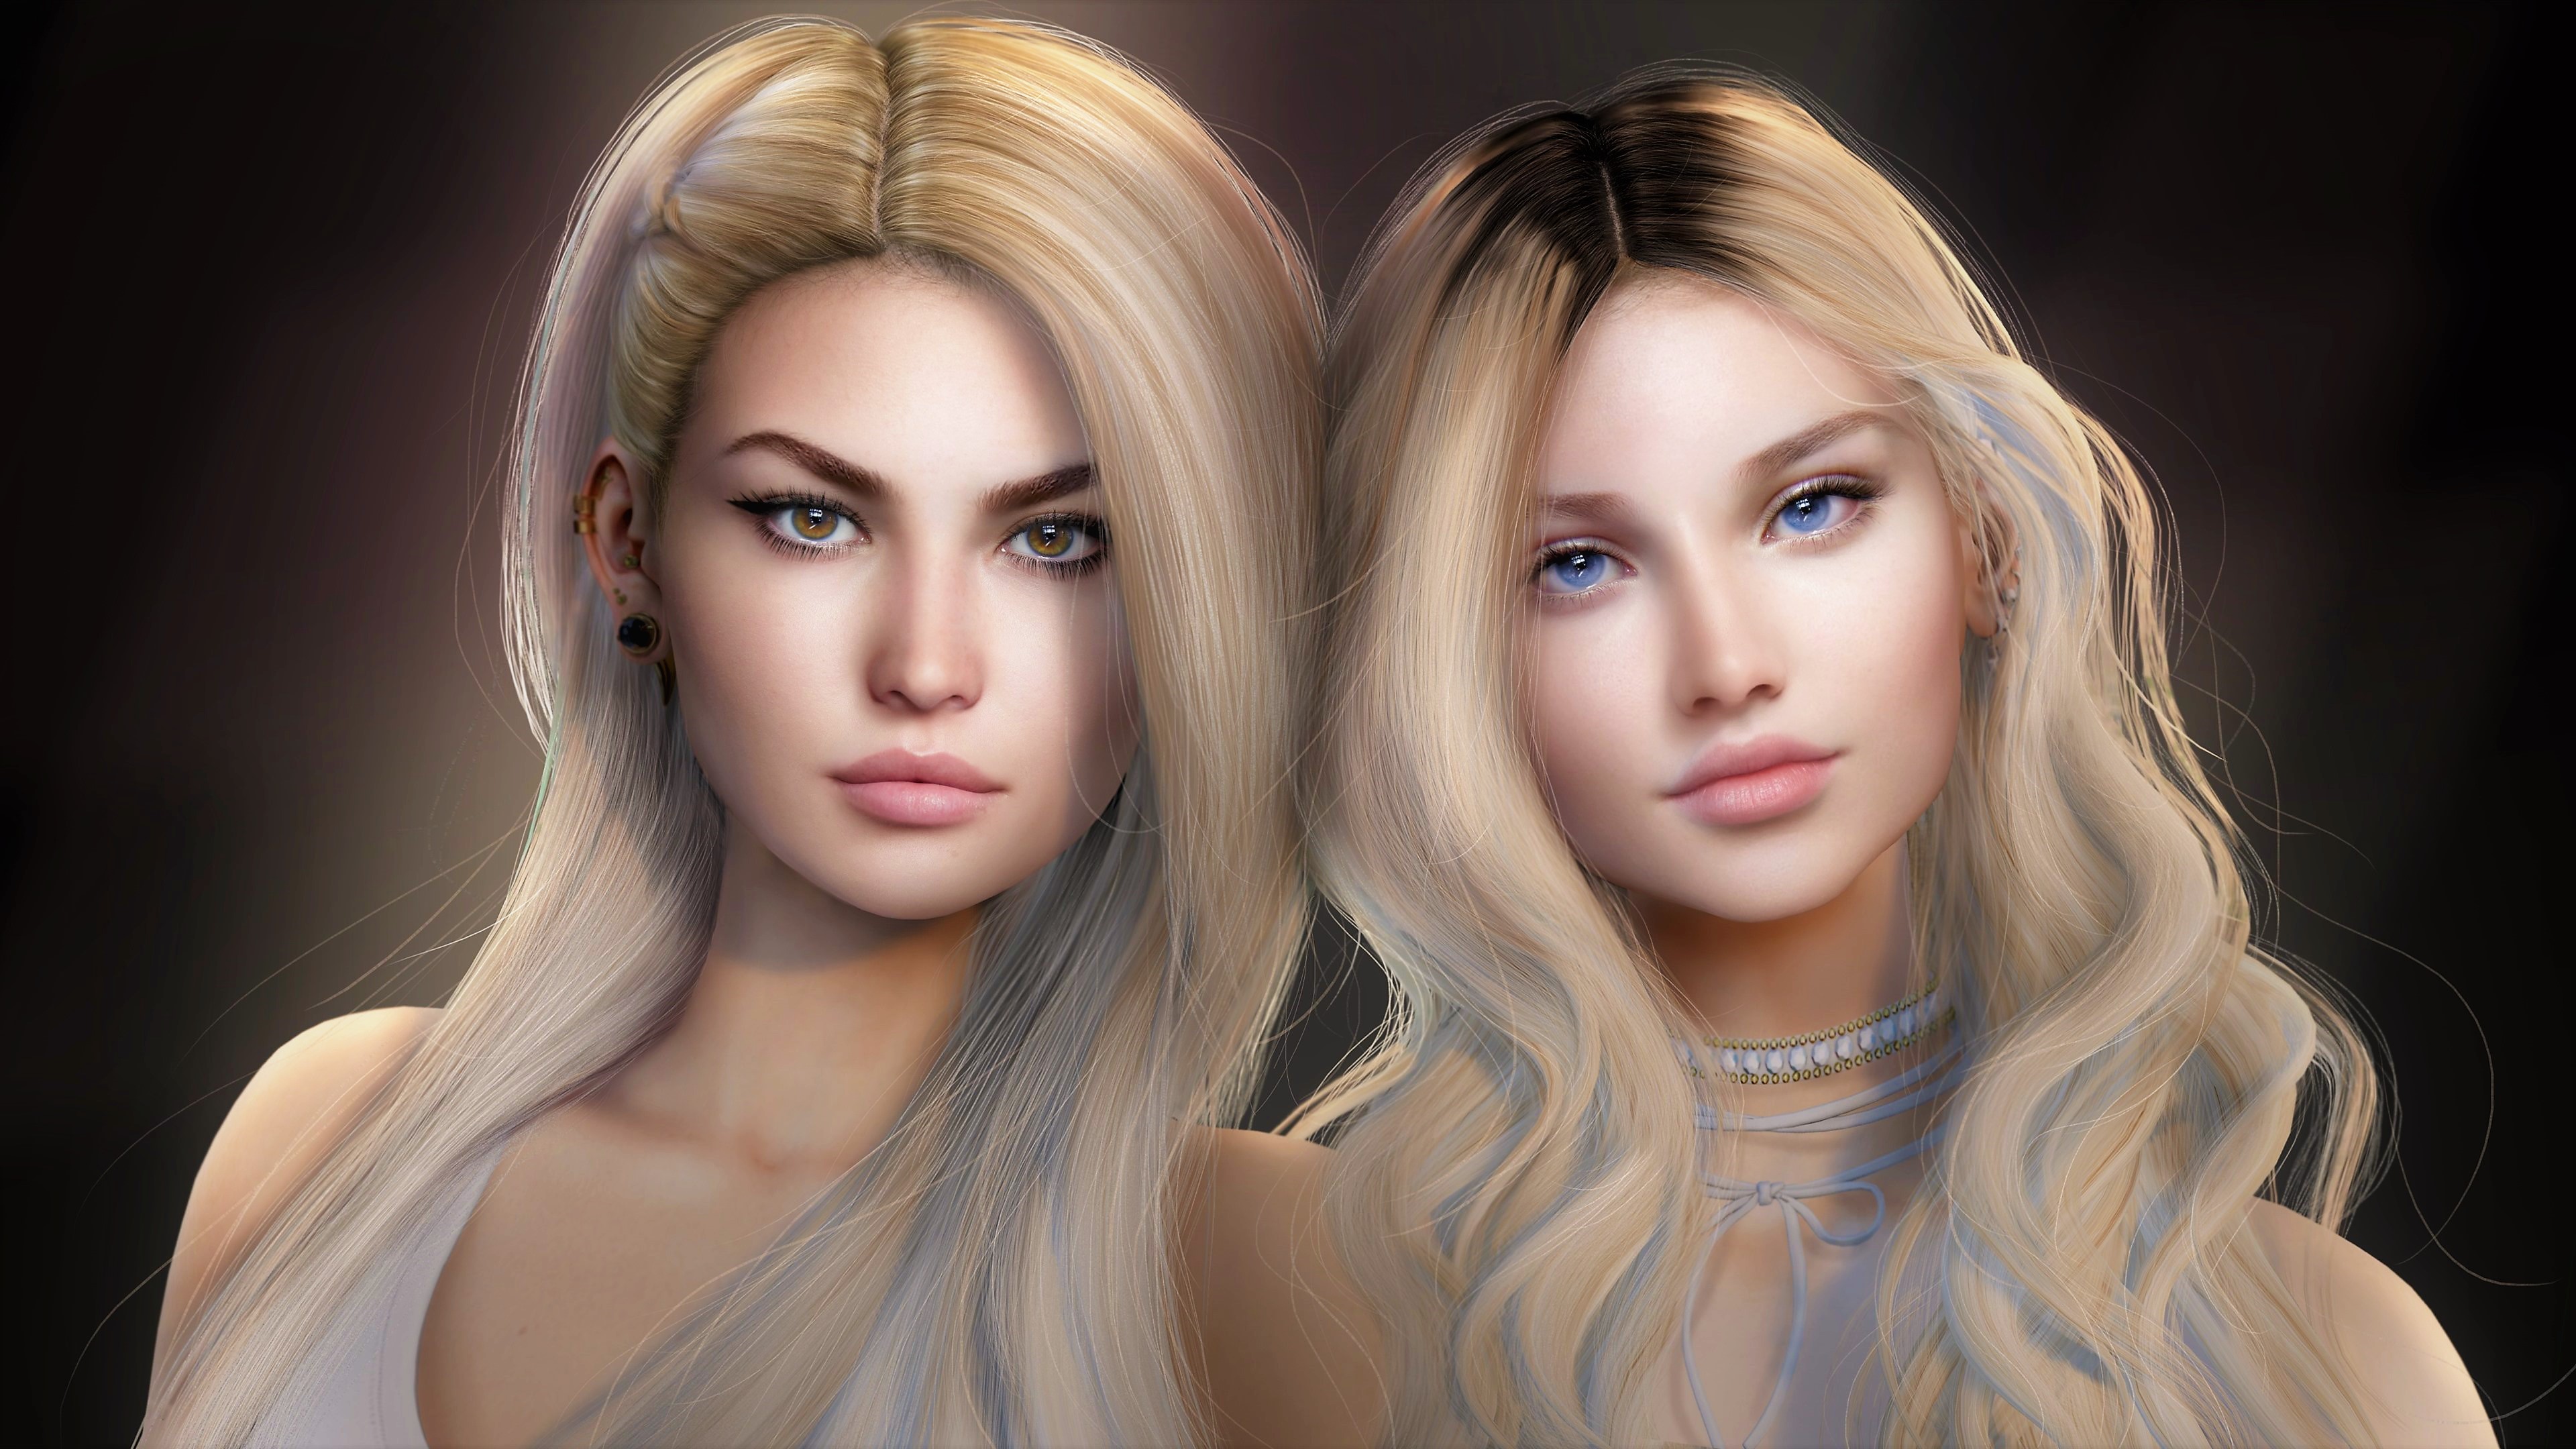 Fantasy Digital Blonde Women
 Wallpapers